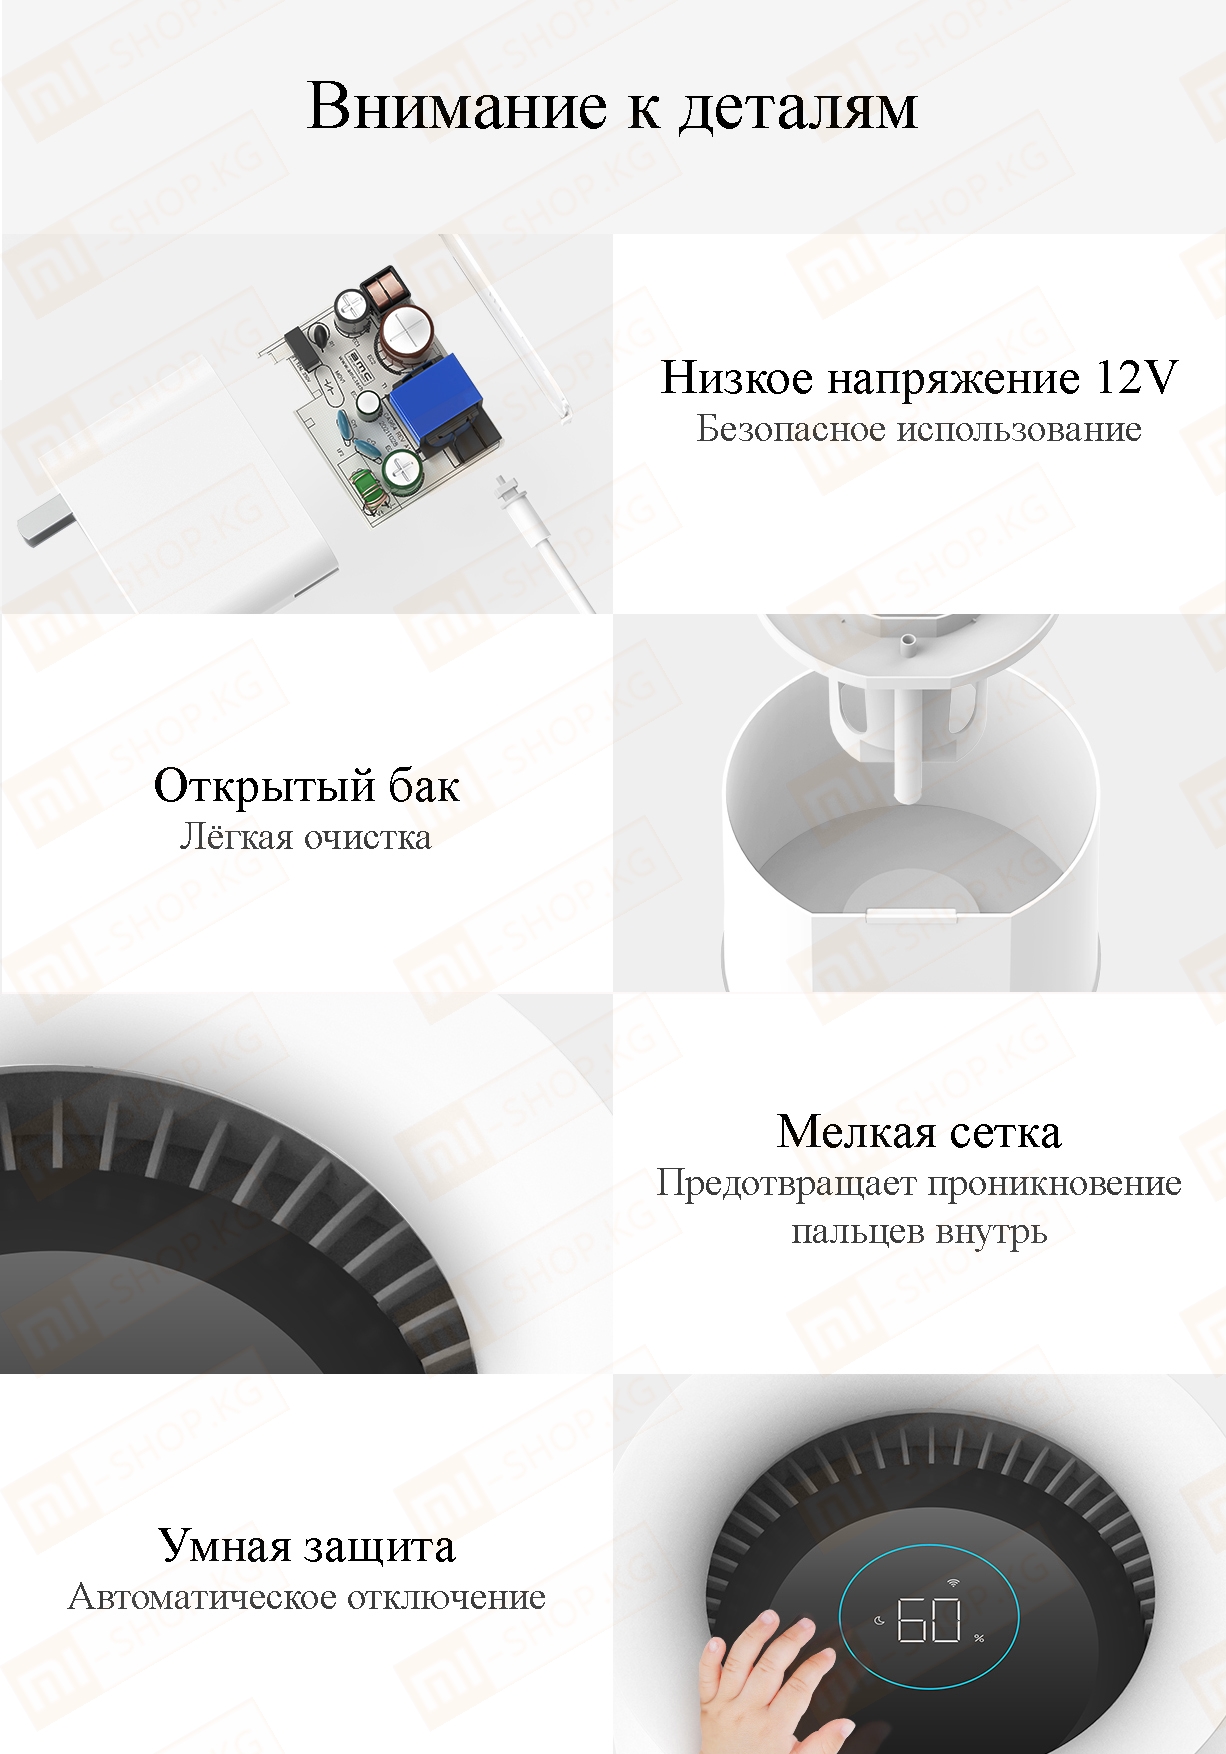 Увлажнитель воздуха Xiaomi Mijia Pure Smart Humidifier 2